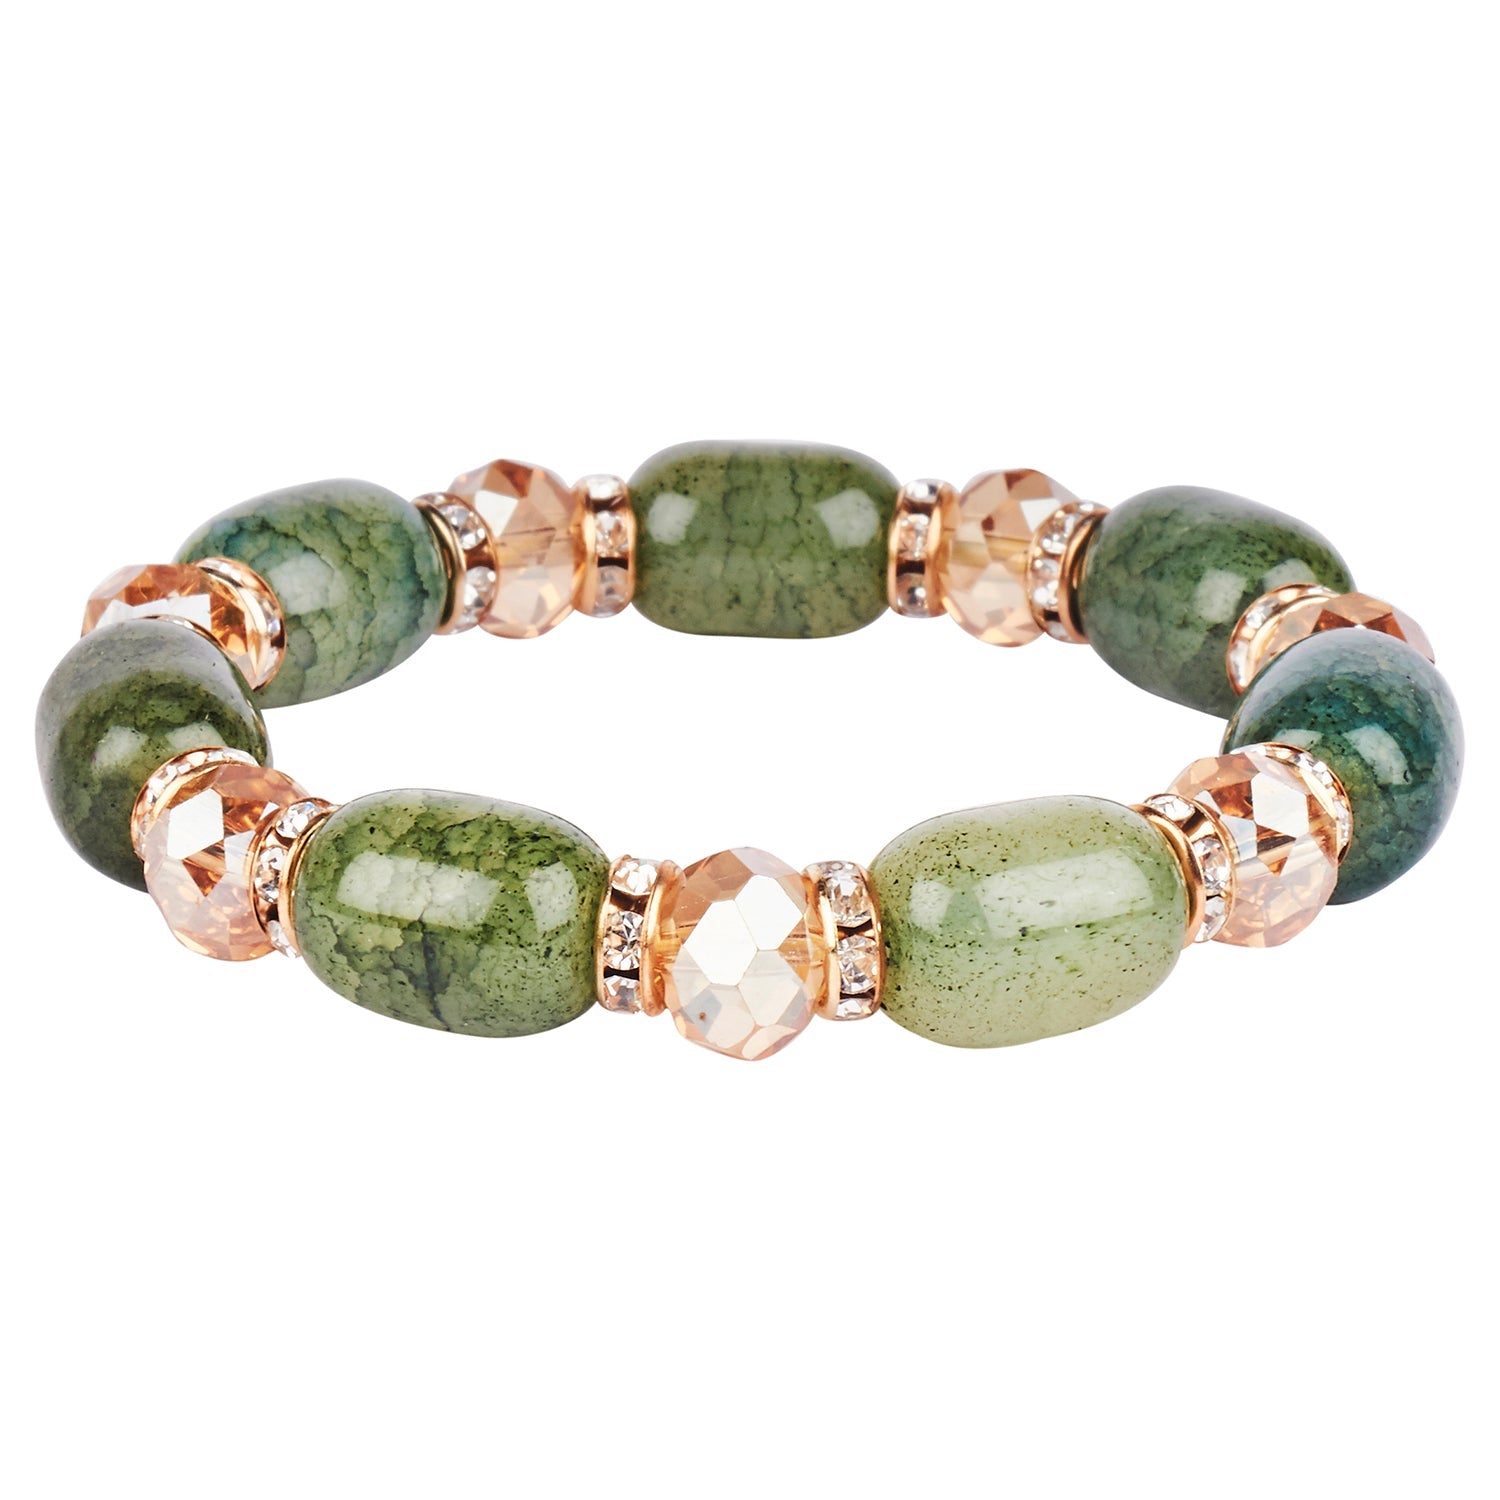 Buy Multi Stone Beads om many padma Buddha Reiki Feng-Shui Healing Crystal Positive  Energy Bracelet 8 Mm Size at Amazon.in